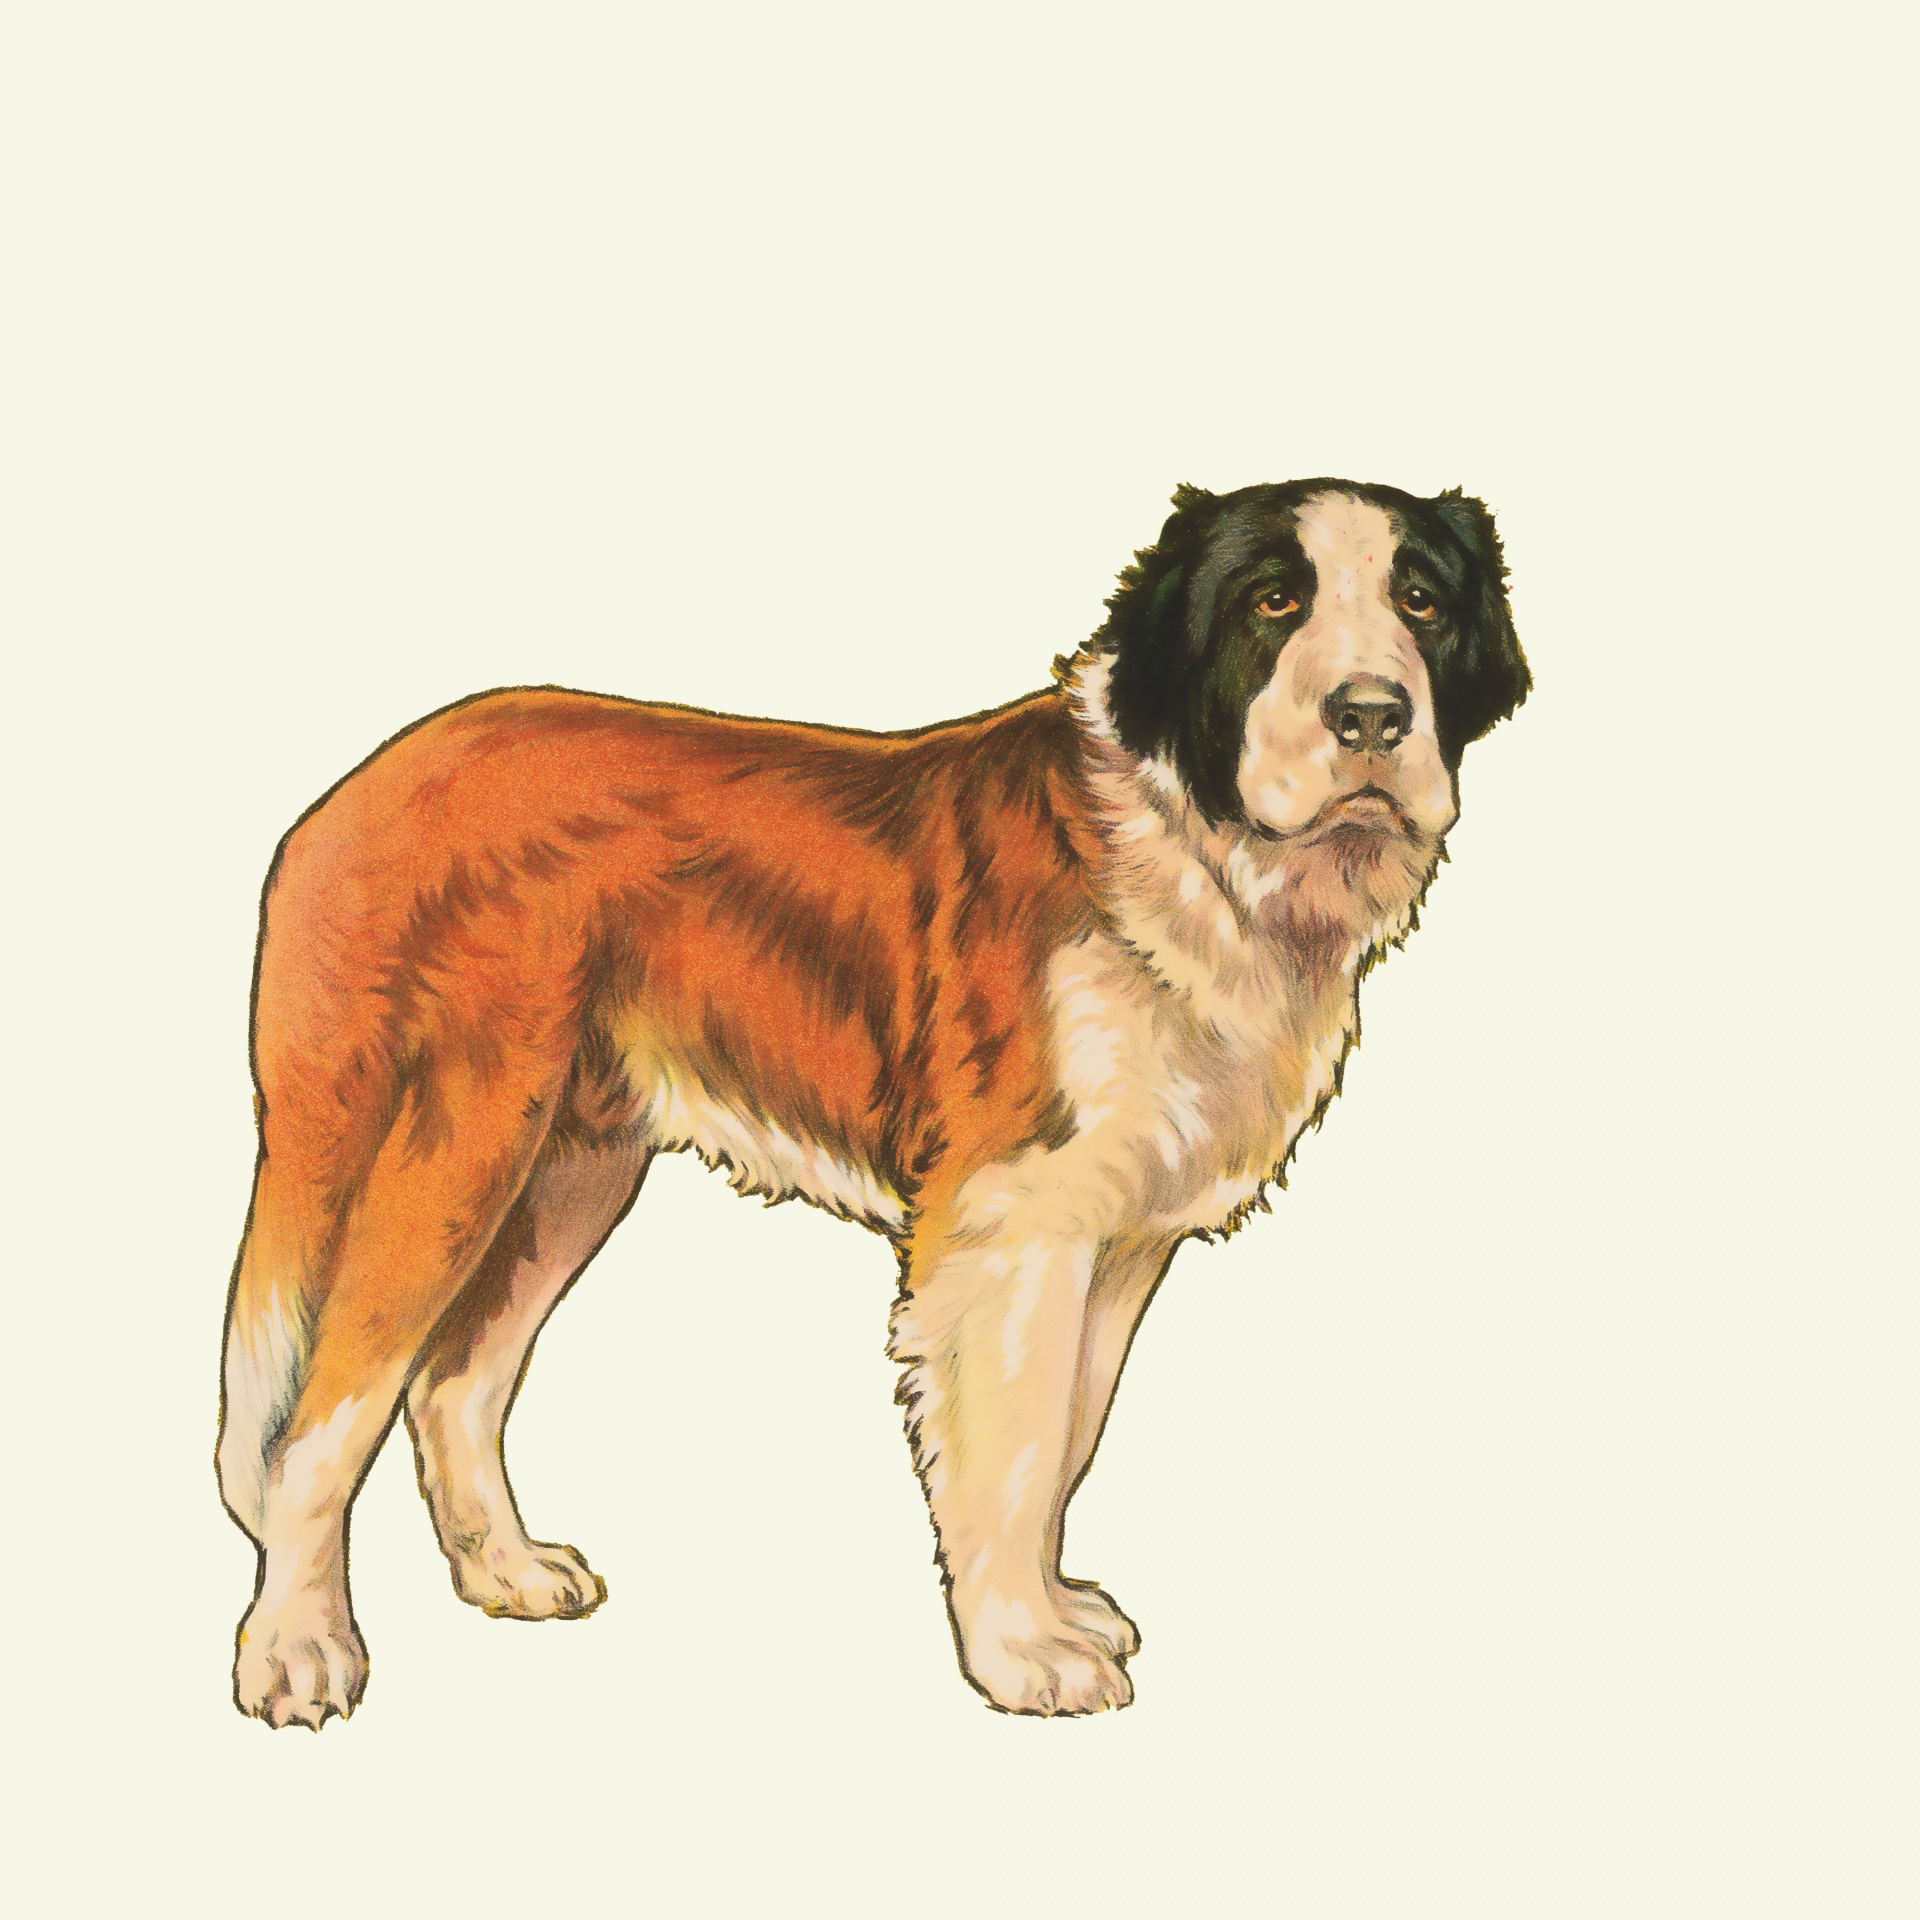 Vintage illustration of a saint bernard dog clipart isolated on off white background